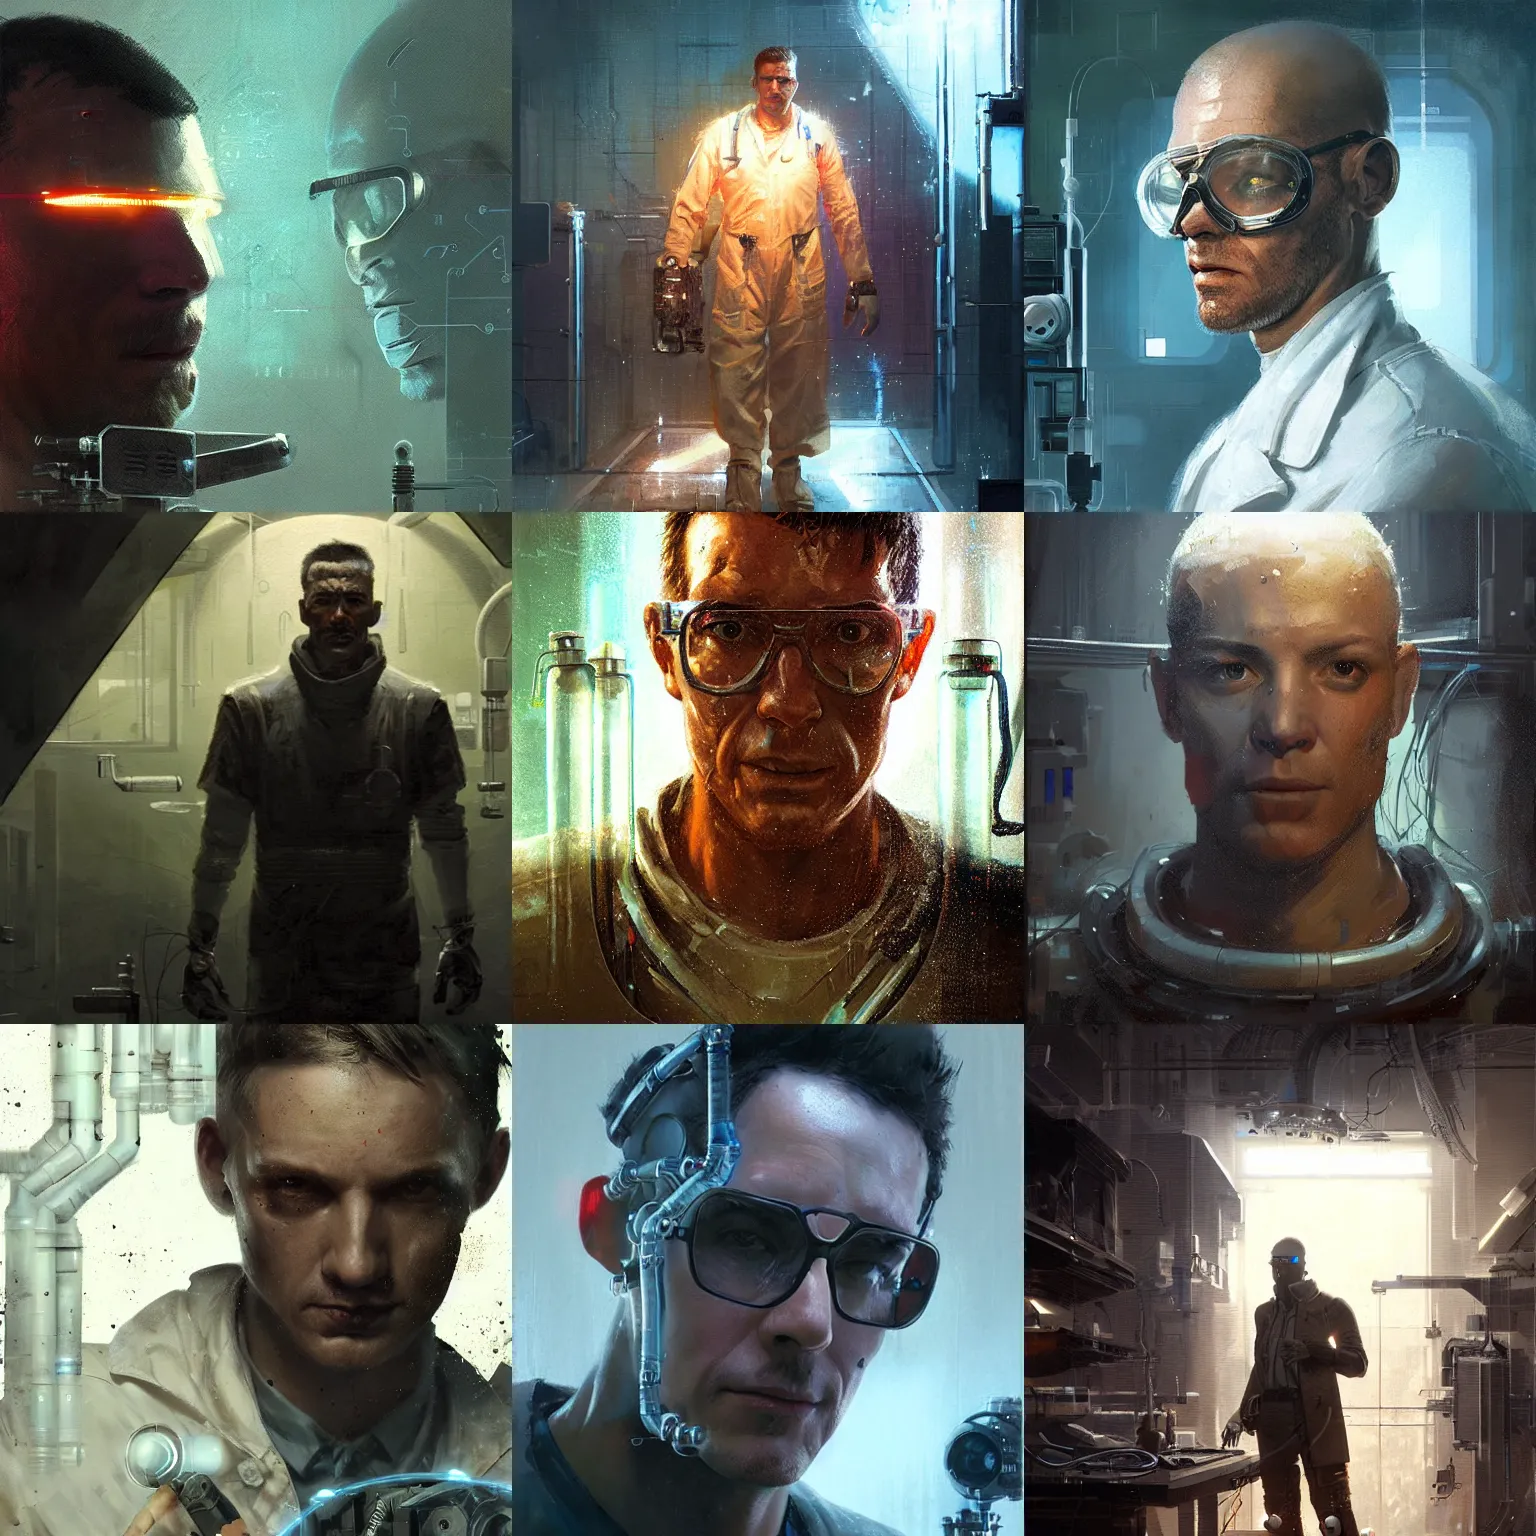 Prompt: a laboratory technician man with cybernetic enhancements, scifi character portrait by greg rutkowski, craig mullins, cinematic lighting, dystopian scifi gadgets